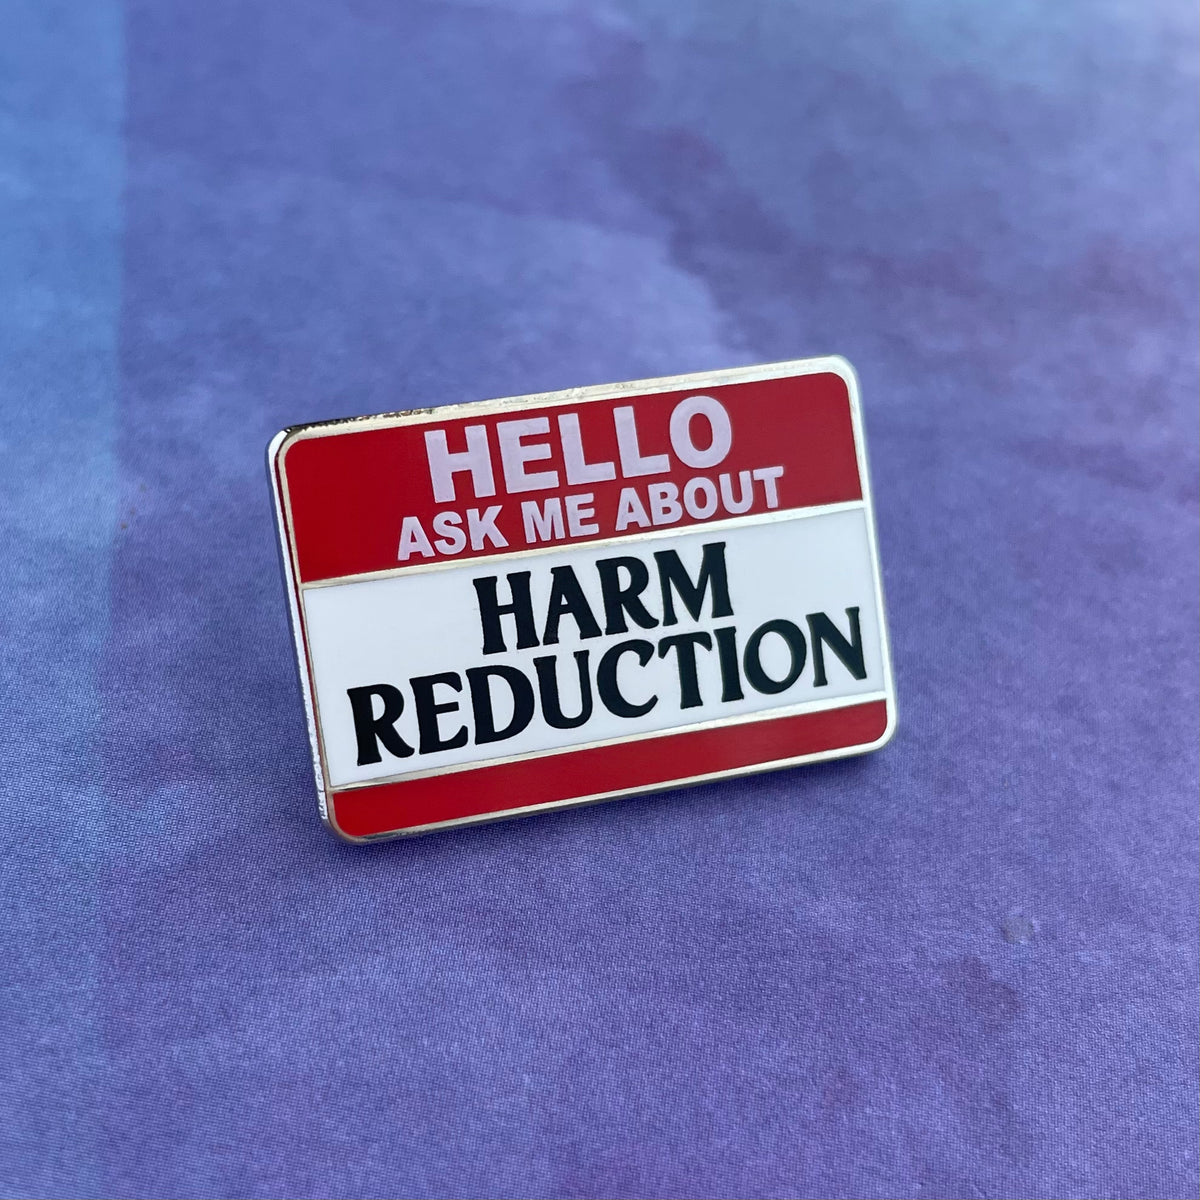 Harm Reduction Pin Pack - Rad Girl Creations Medical enamel pins